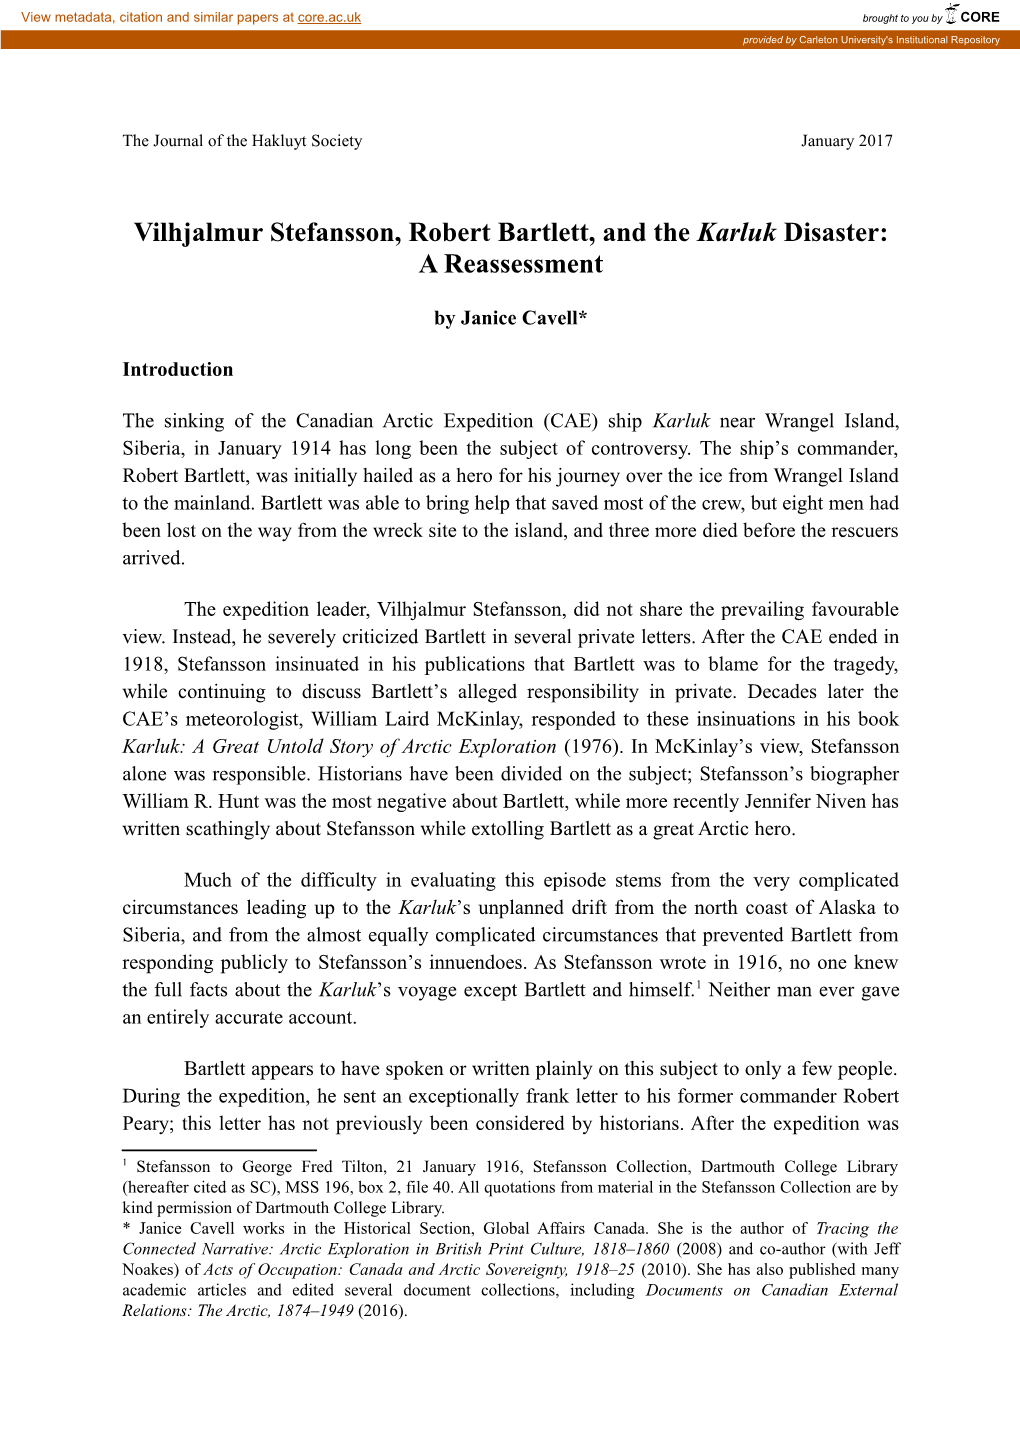 Vilhjalmur Stefansson, Robert Bartlett, and the Karluk Disaster: a Reassessment